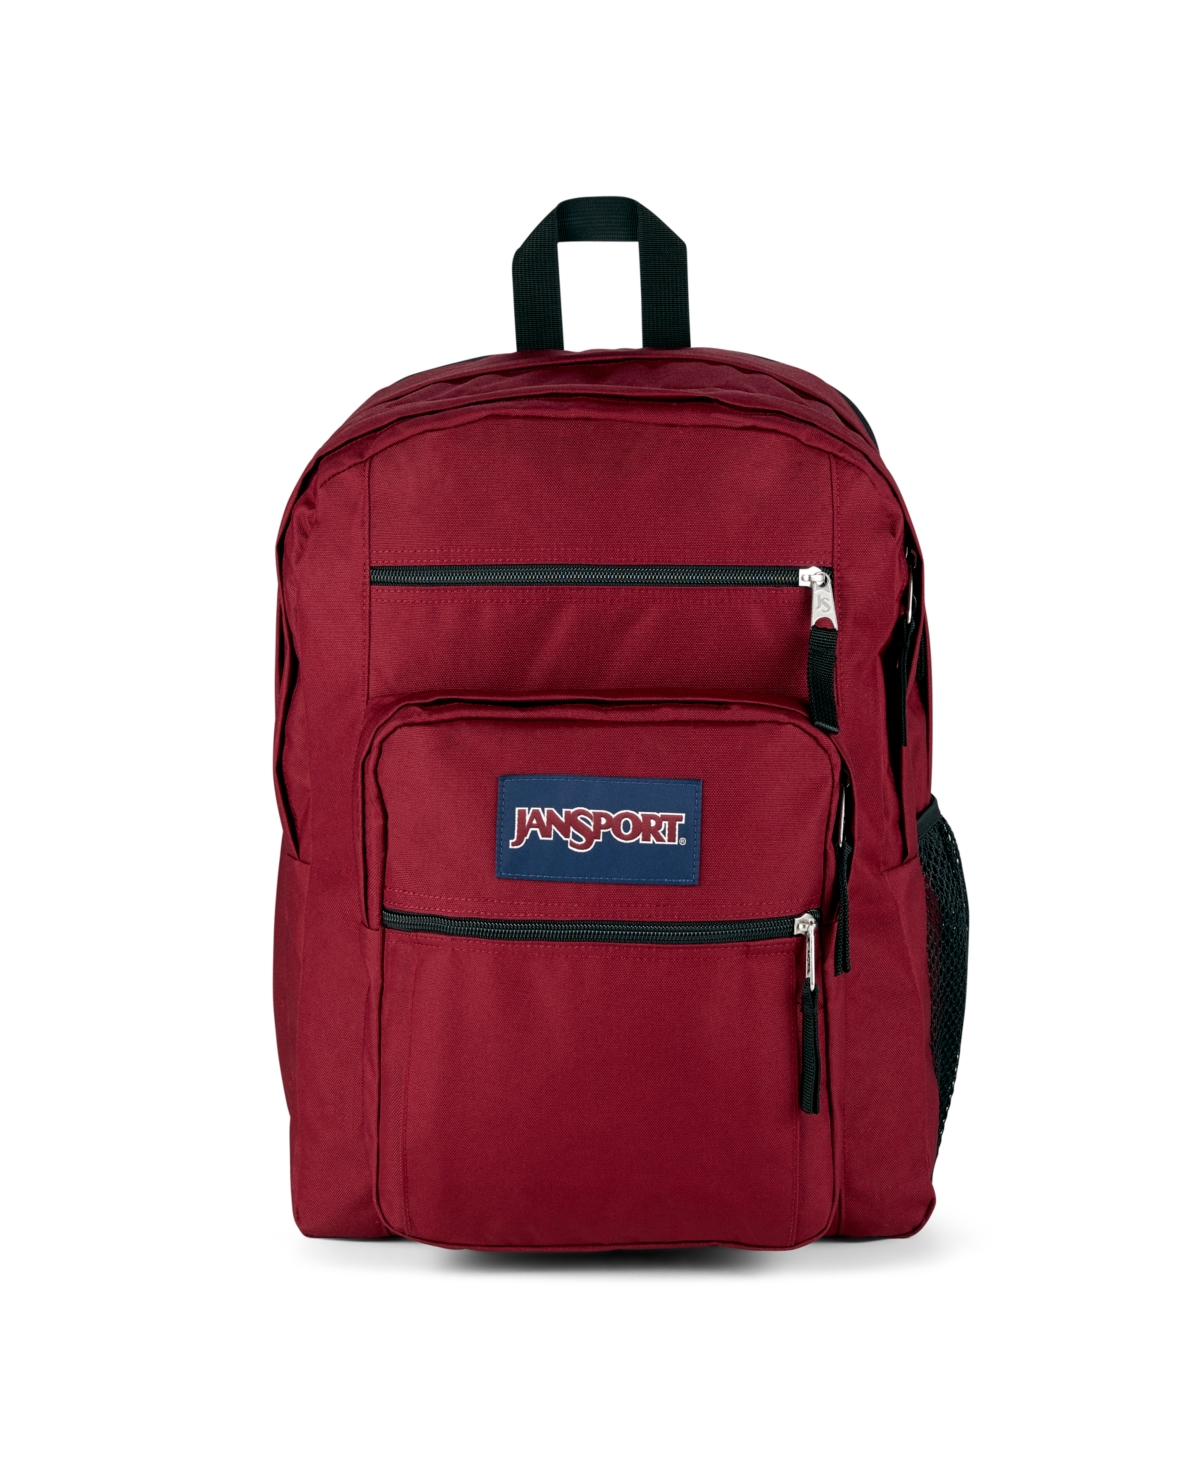 Jansport Big Student Backpack In Russet Red